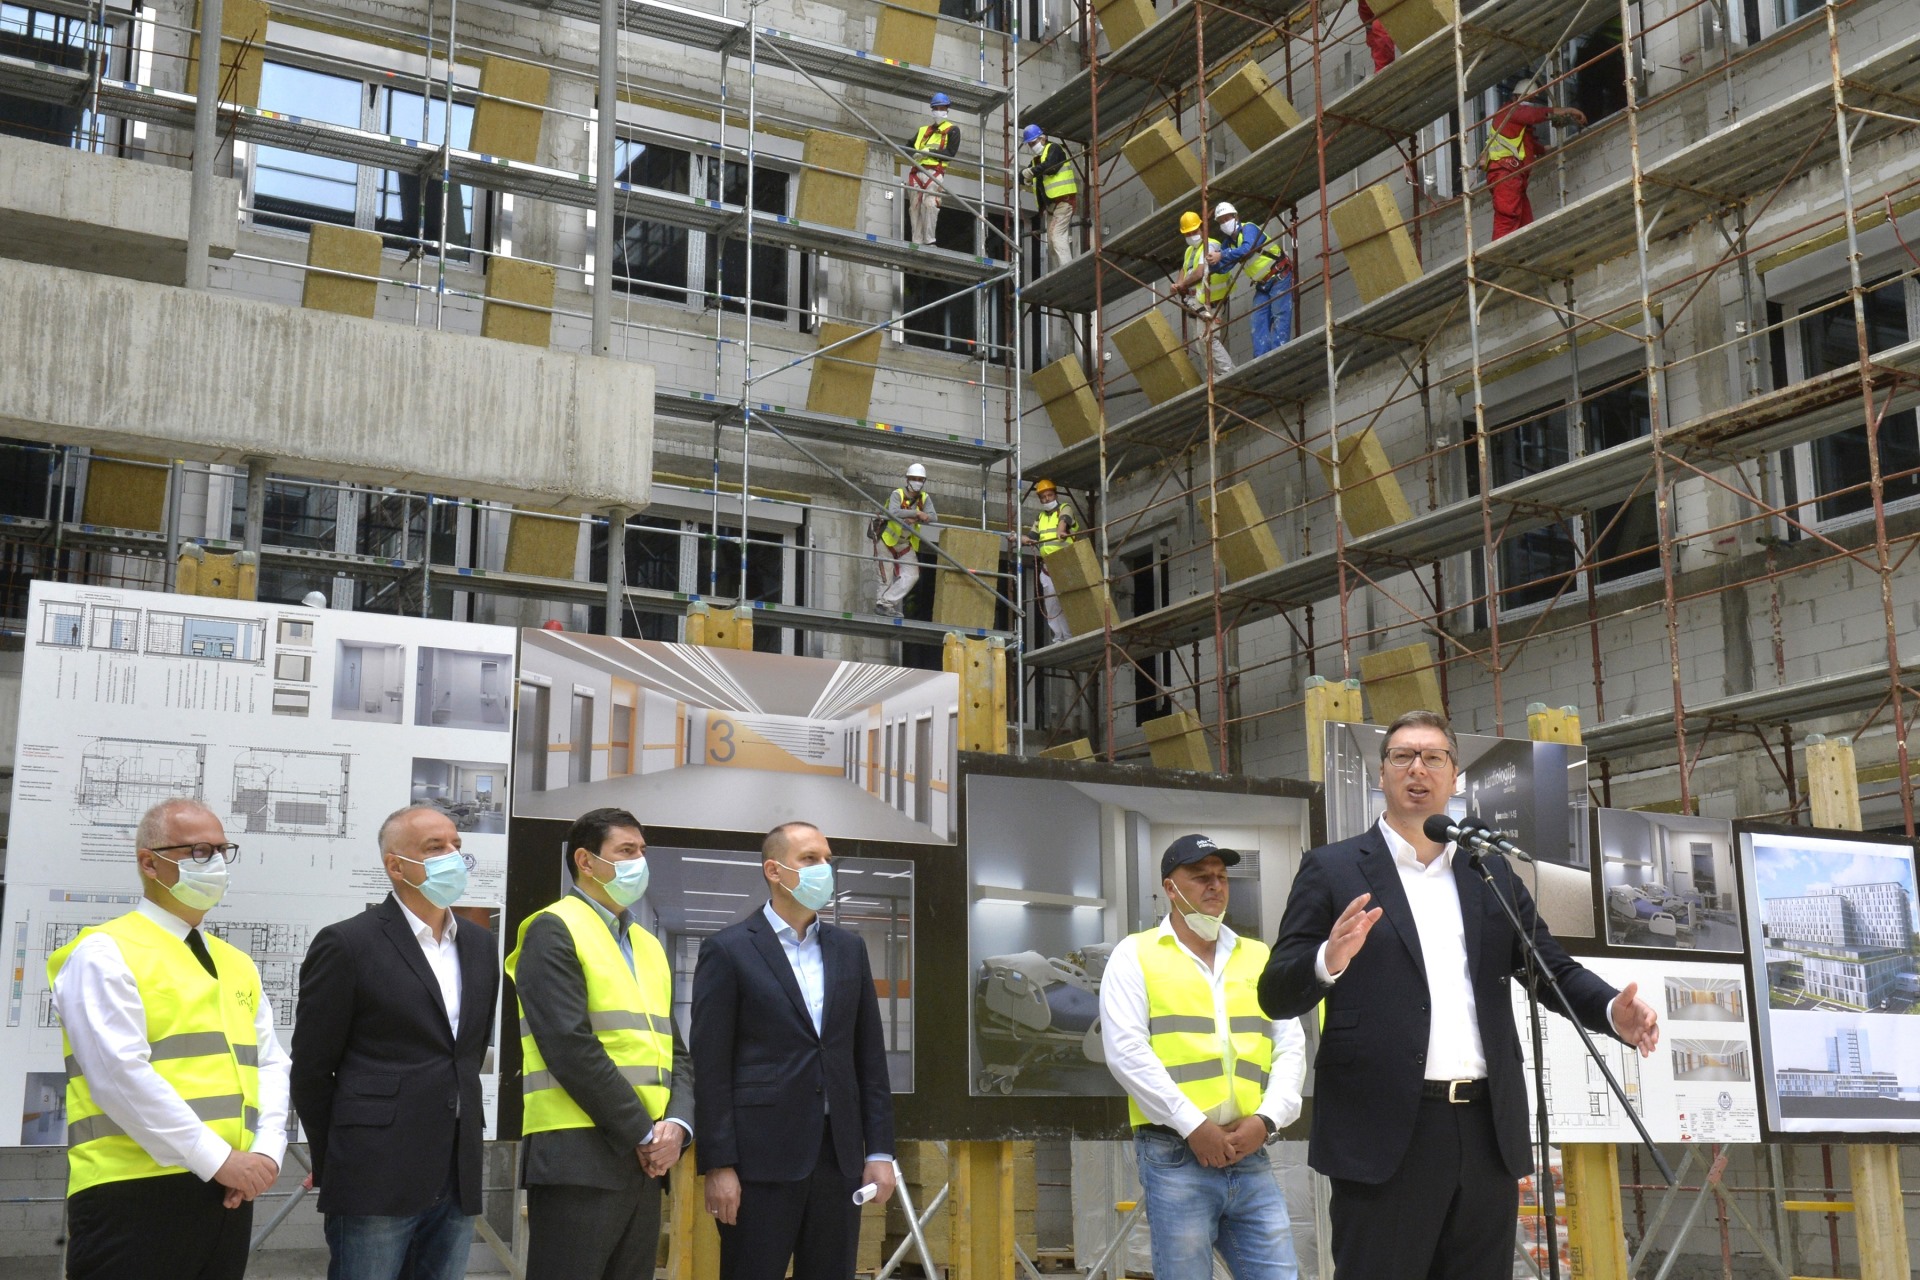 Predsednik Srbije Aleksandar Vucic obisao je danas radove na izgradnji i rekonstrukciji Klinickog centra Srbije u Beogradu.4